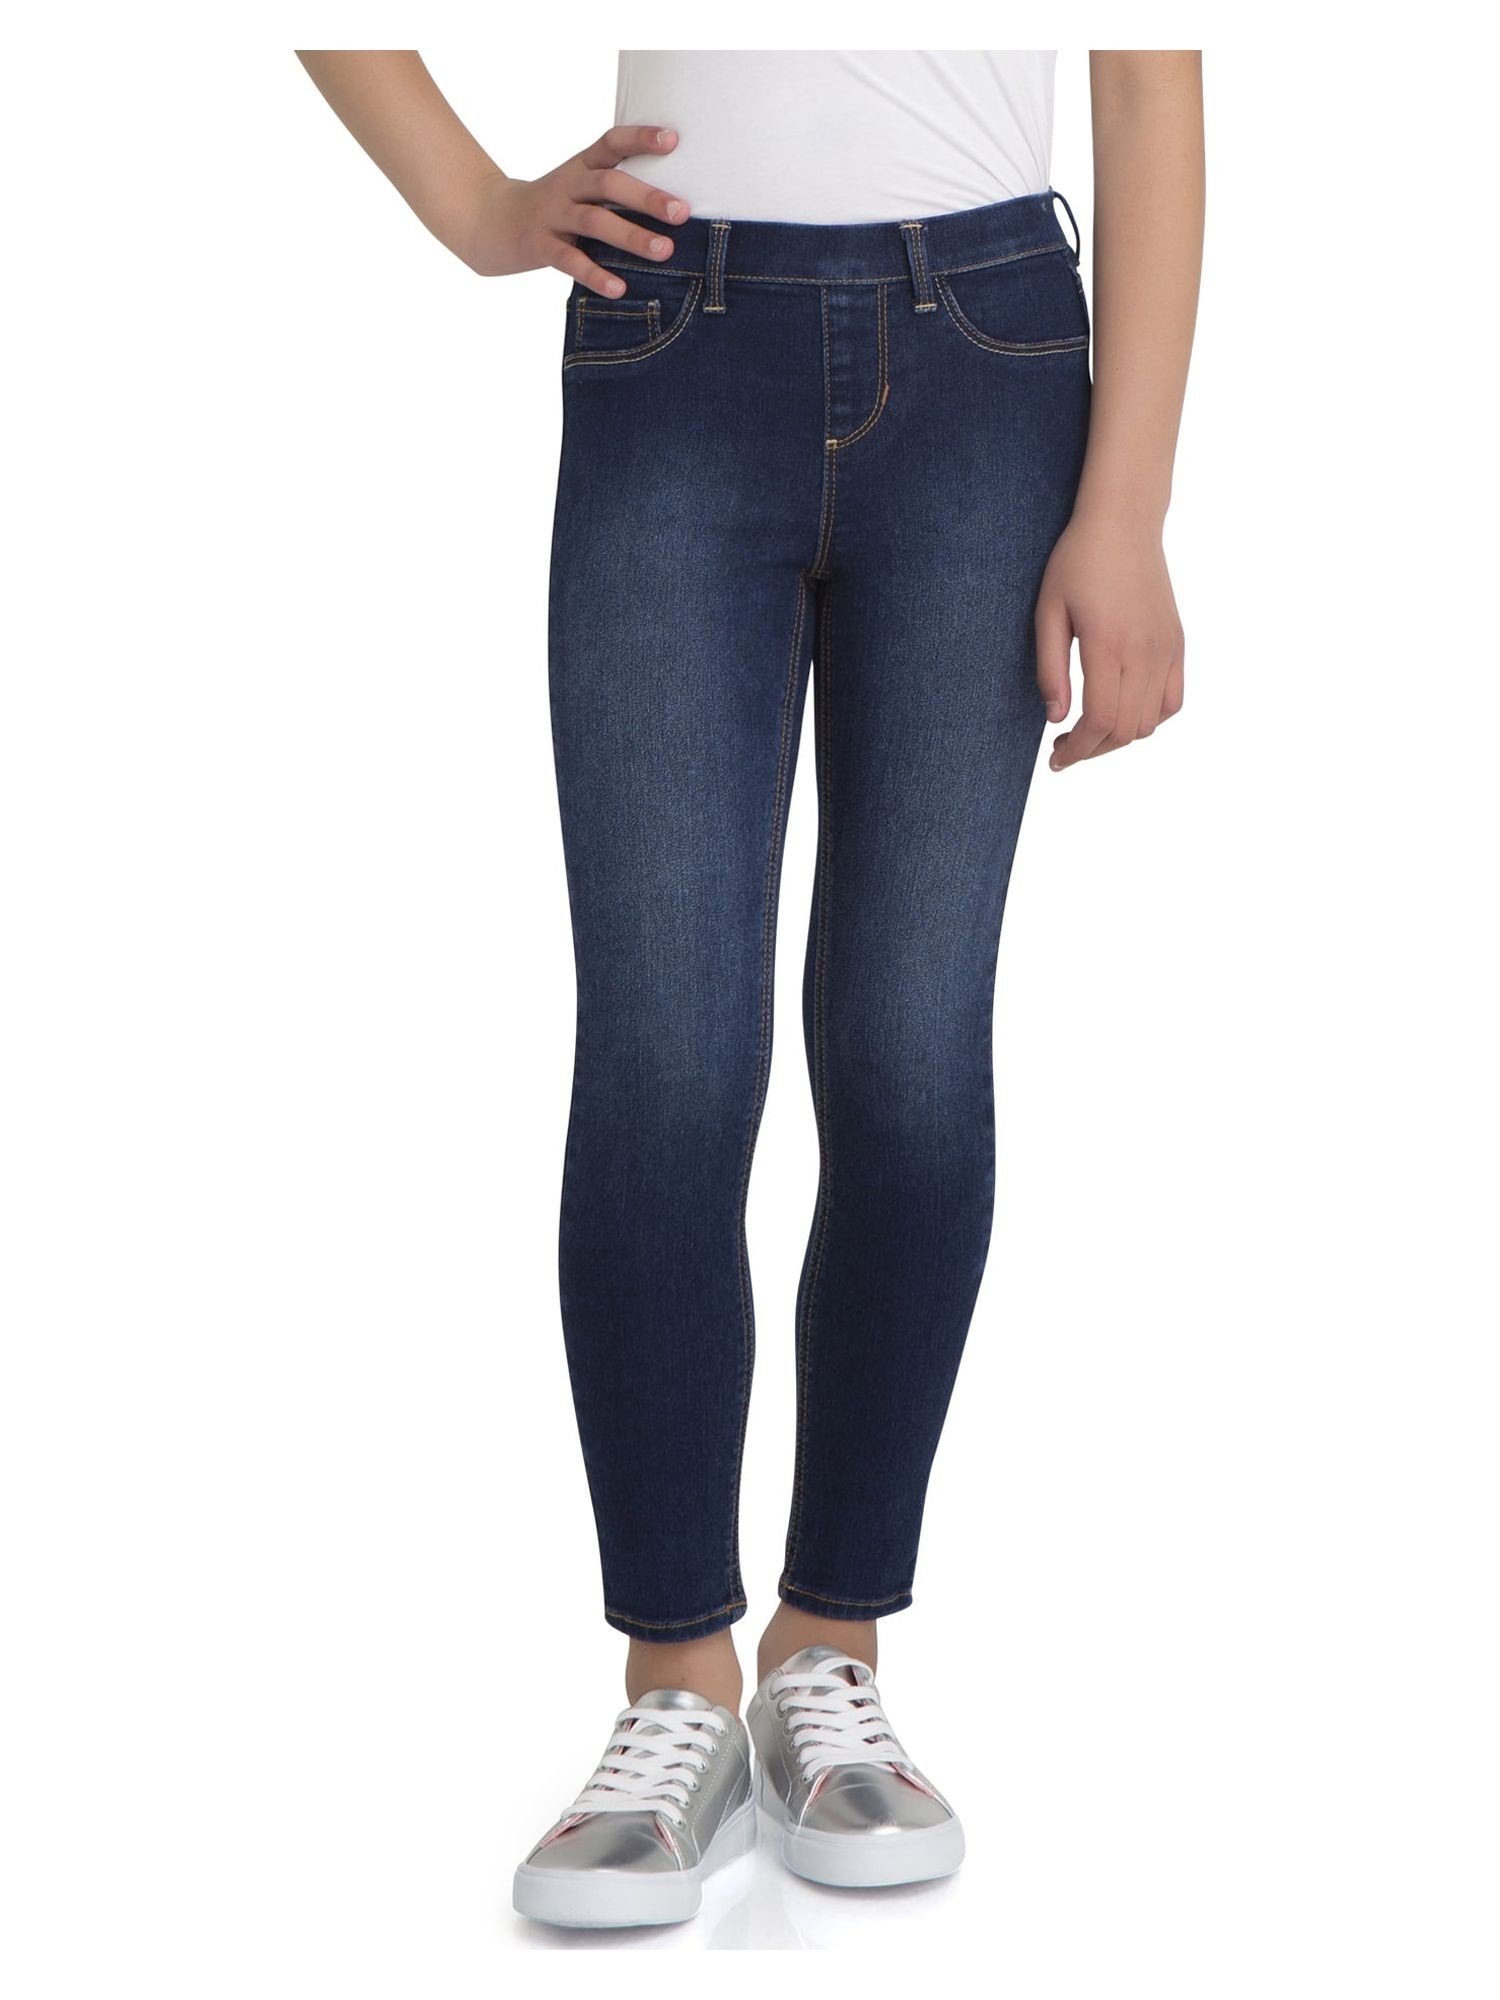 Wonder Nation Girls Kid Tough Pull-On Jegging Jeans, 2-Pack, Sizes 4-18 &  Plus 